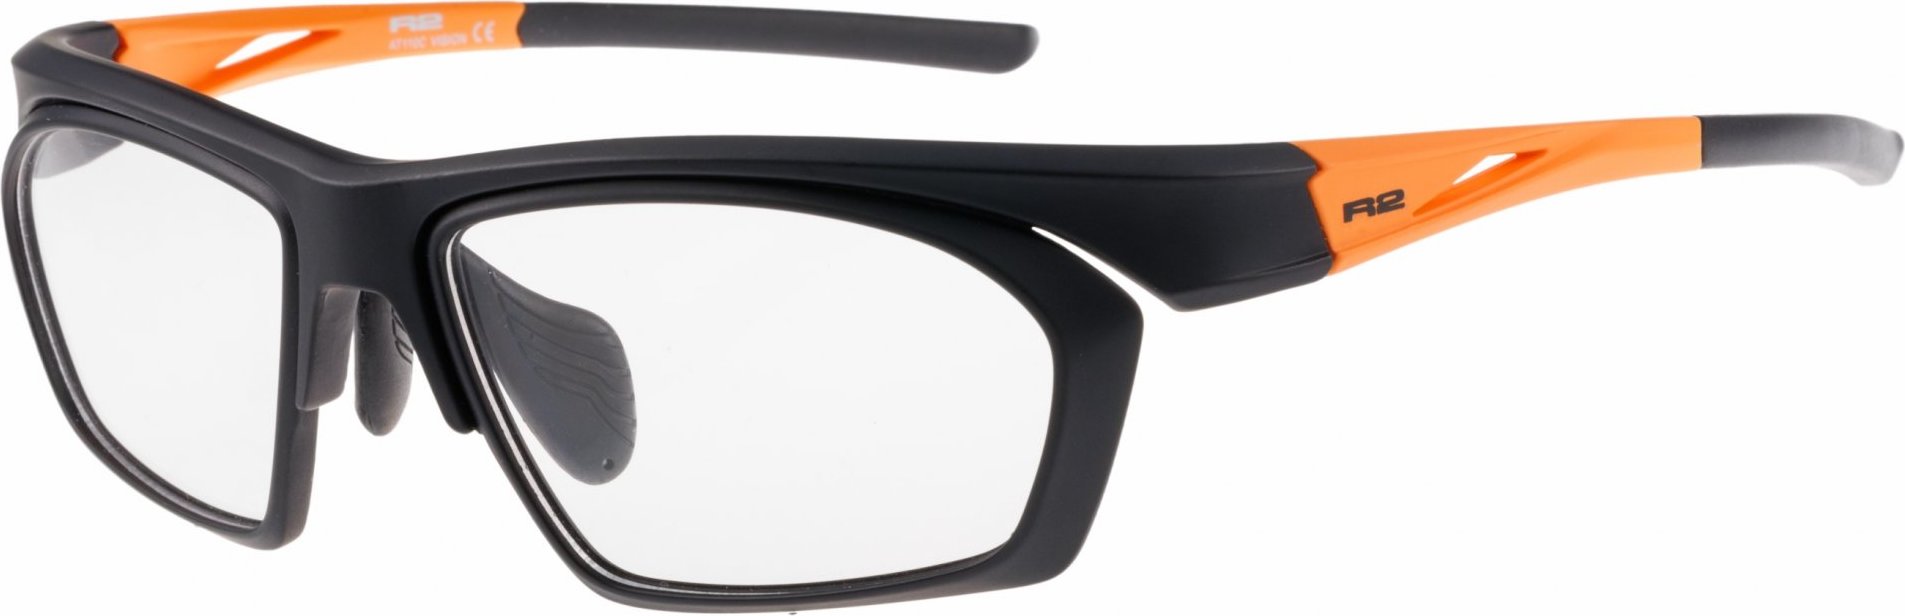 Sportovní dioptrické brýle R2 Vision černé